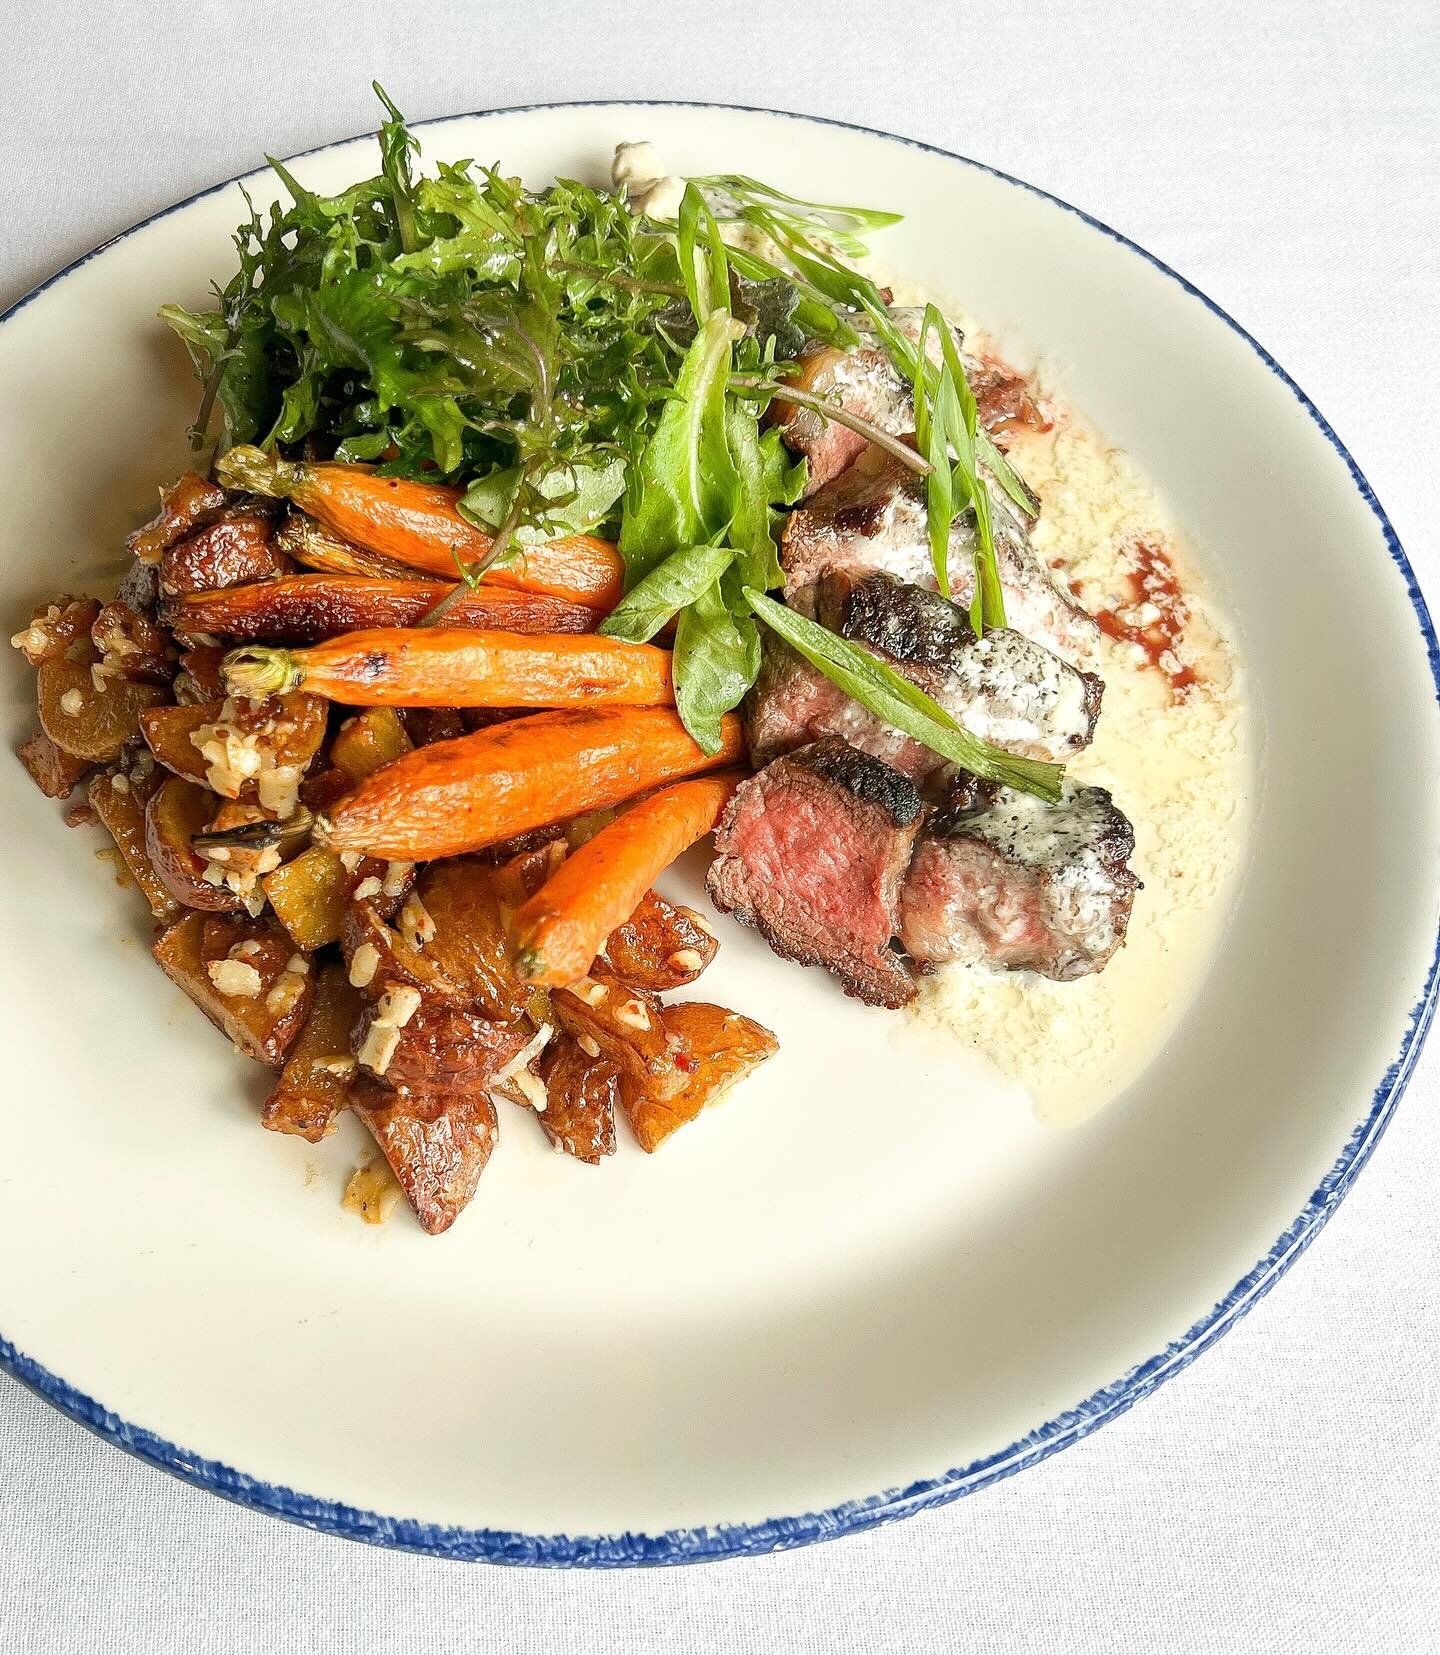 🥩 Steak Special 🥩
🔹 10oz. Gray Barn New York Strip 🔹
Roasted Potatoes, Honey Glazed Carrots, Mixed Greens, Bleu Cheese Butter